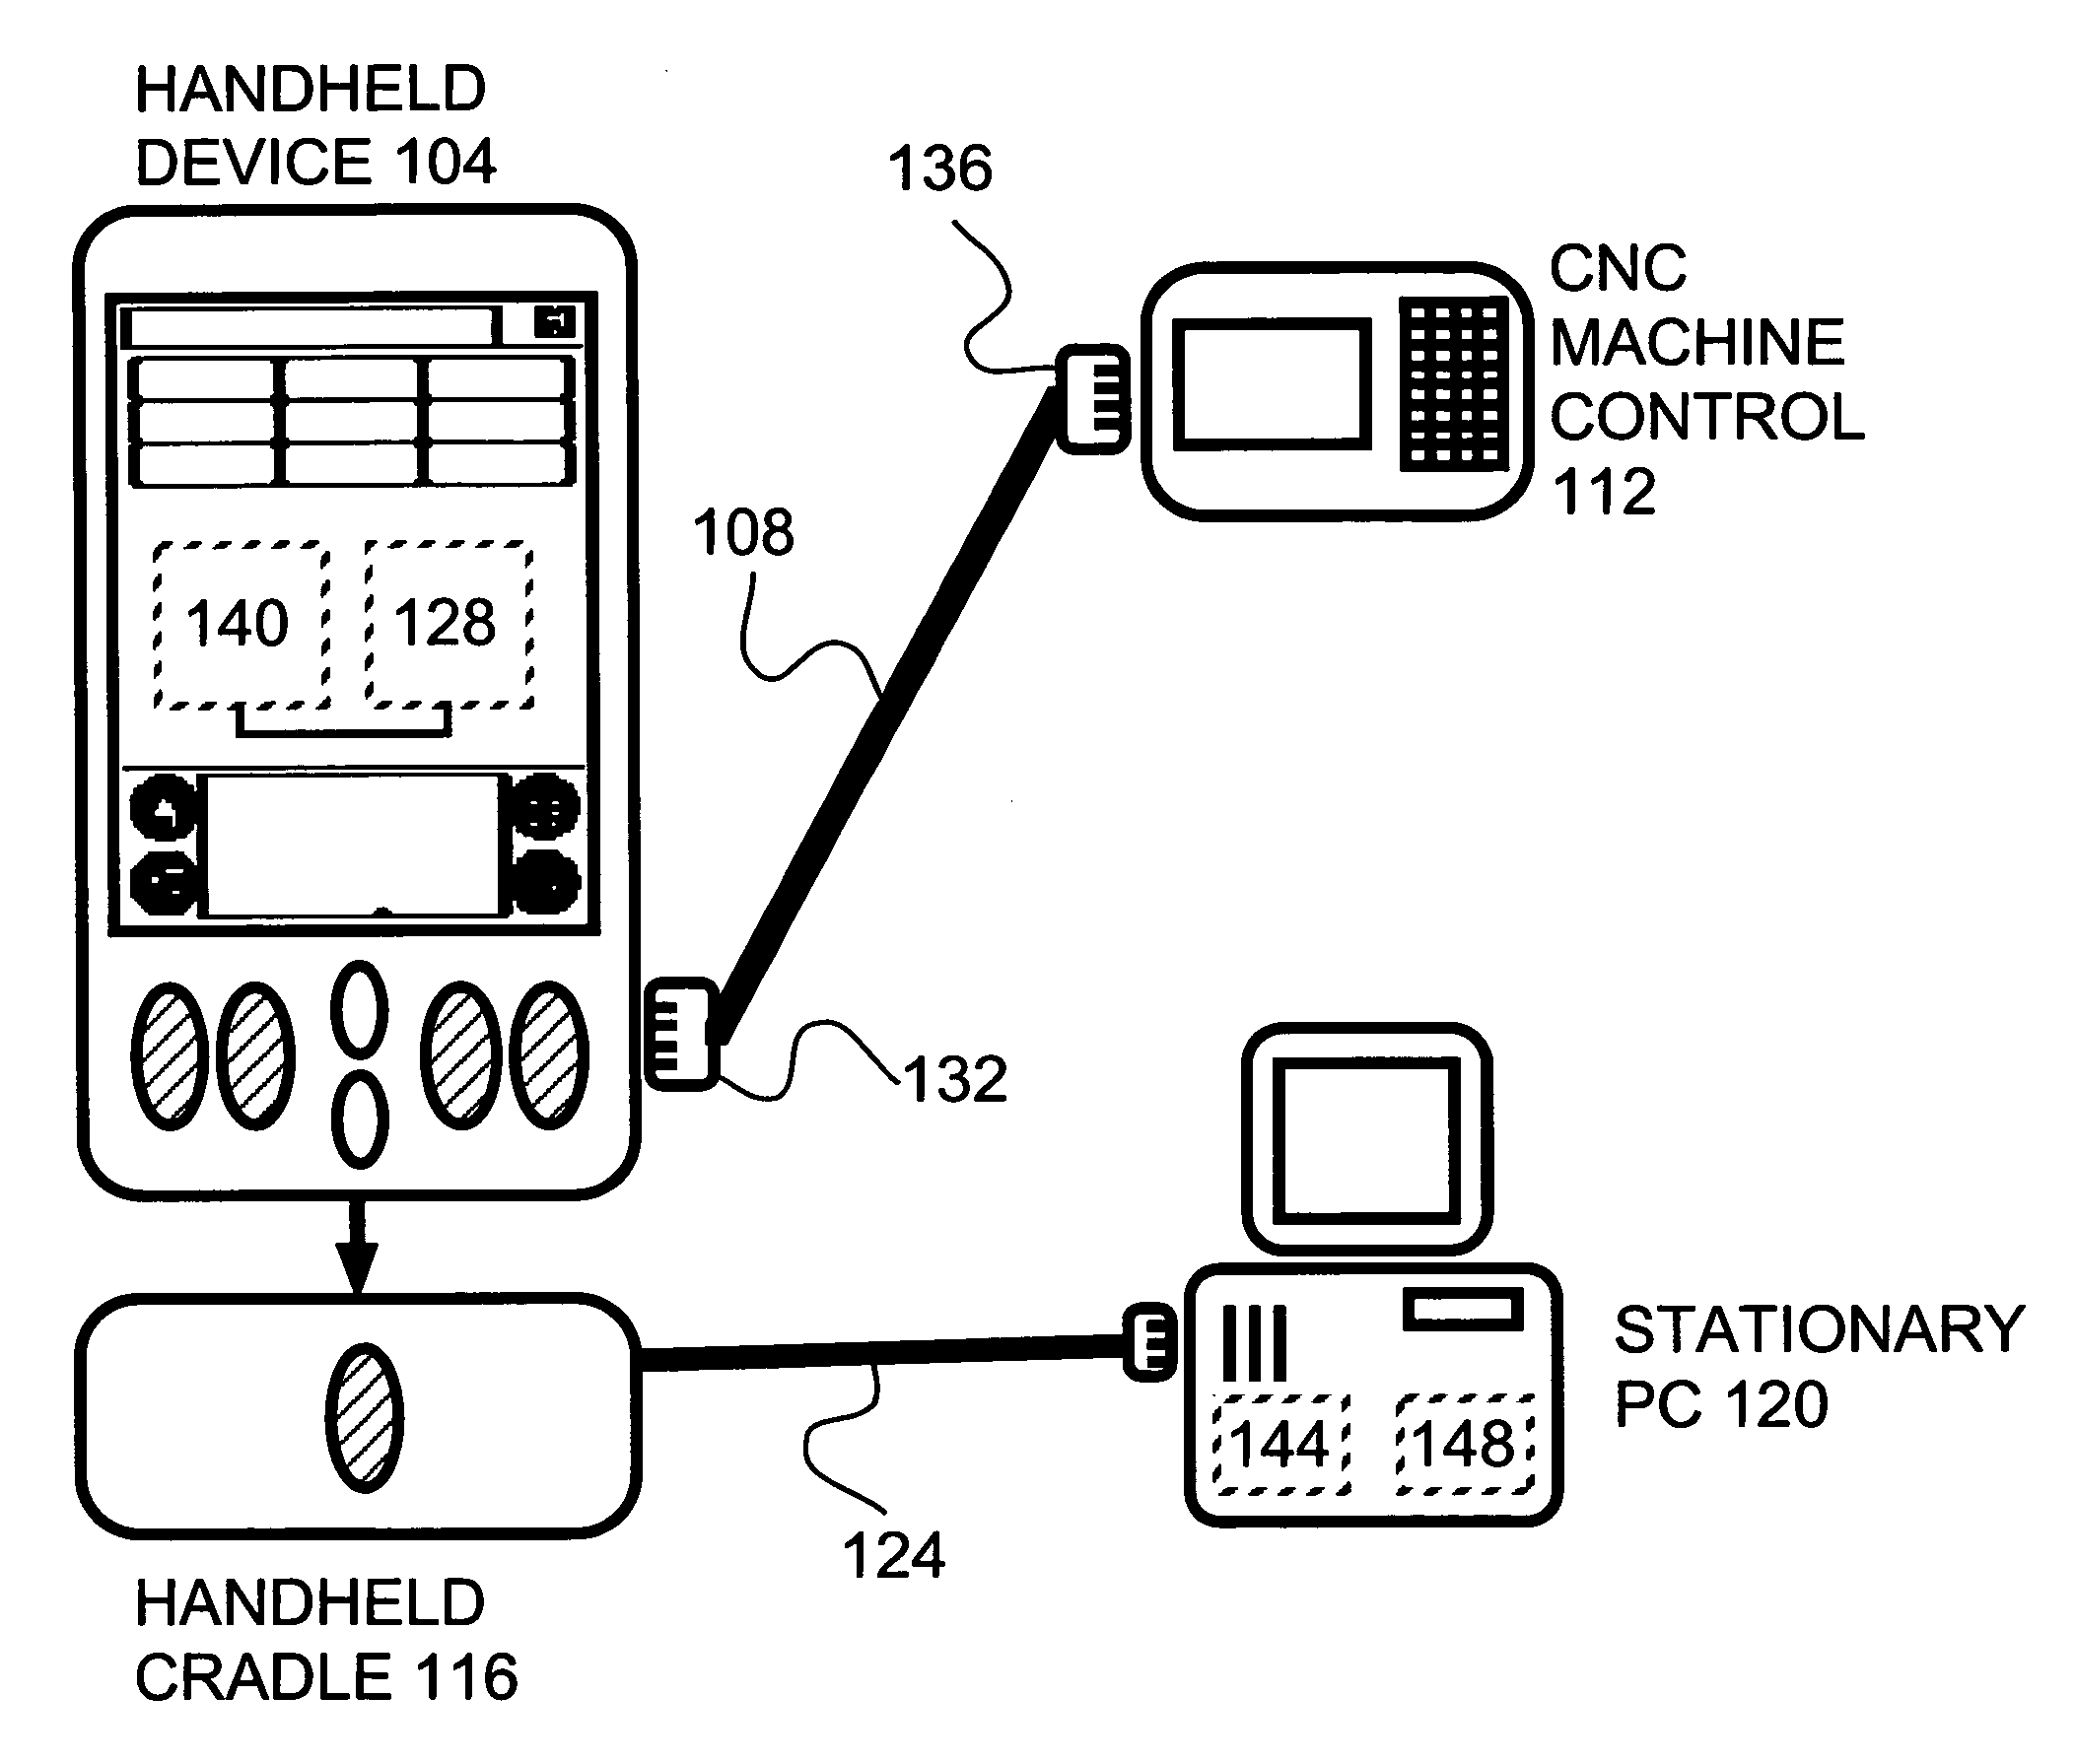 Portable hand-held CNC machine tool programming device